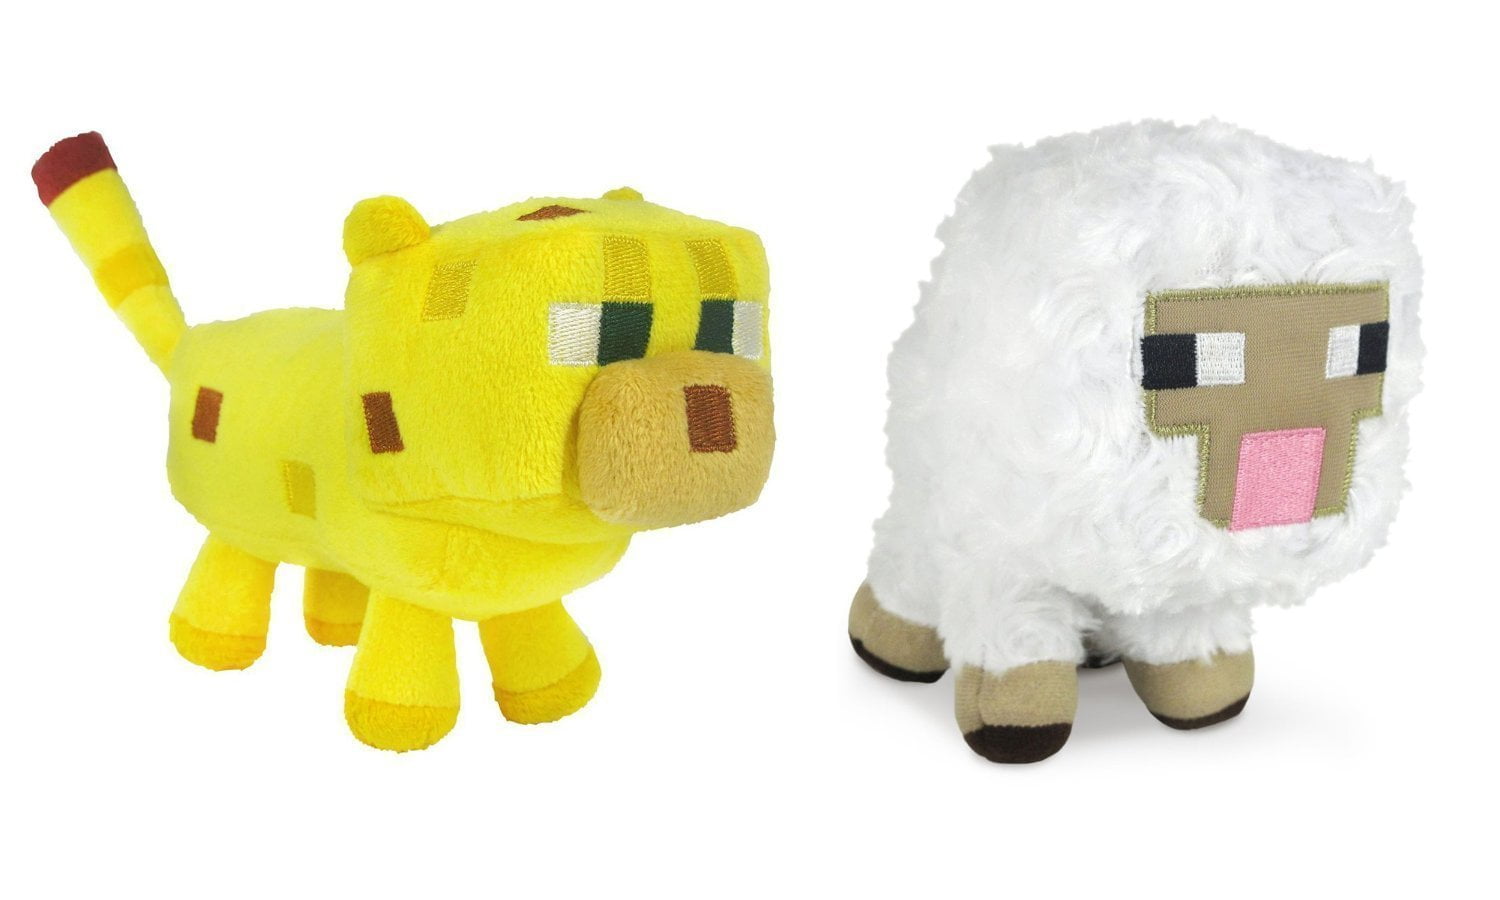 minecraft sheep stuffed animal